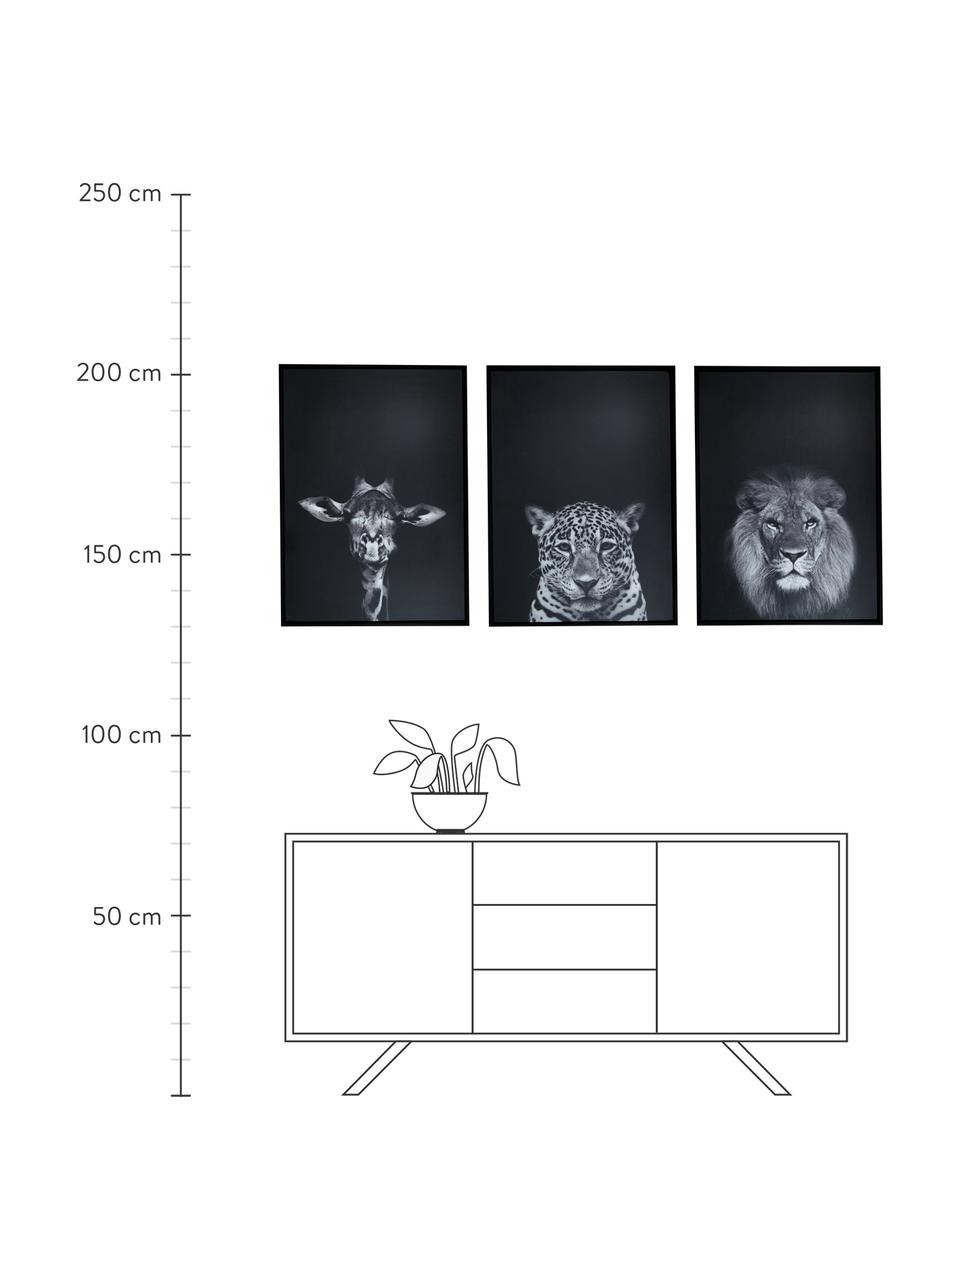 Gerahmtes Kunstdruck-Set Wild-Life, 3-tlg., Rahmen: Eukalyptusholz, Mitteldic, Schwarz, Weiss, B 53 x H 73 cm